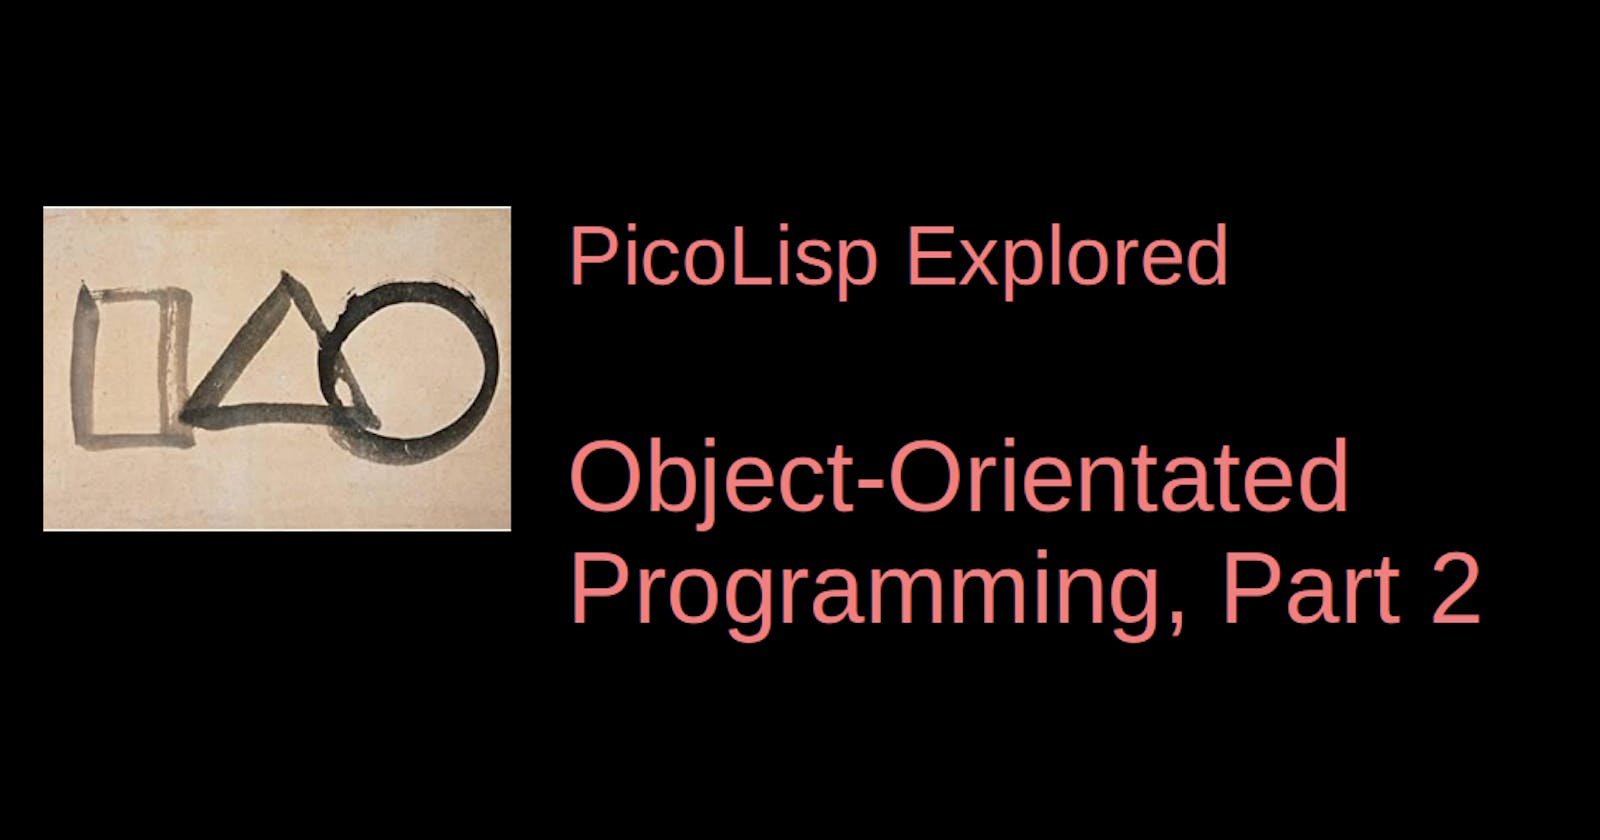 PicoLisp Explored: Object-Oriented Programming, Part 2